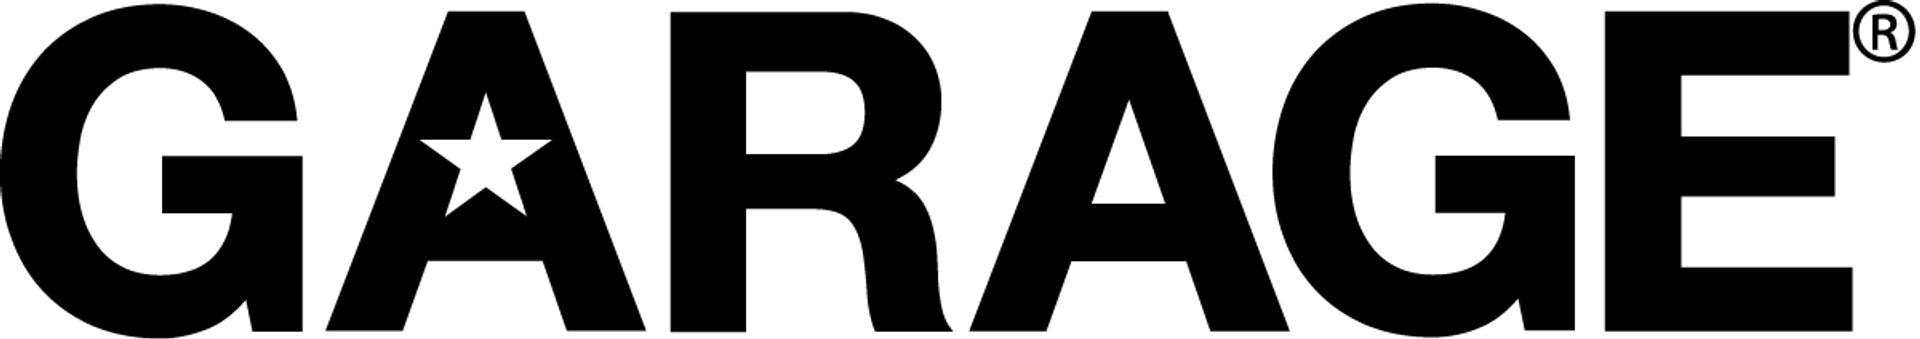 GARAGE logo de circulaires